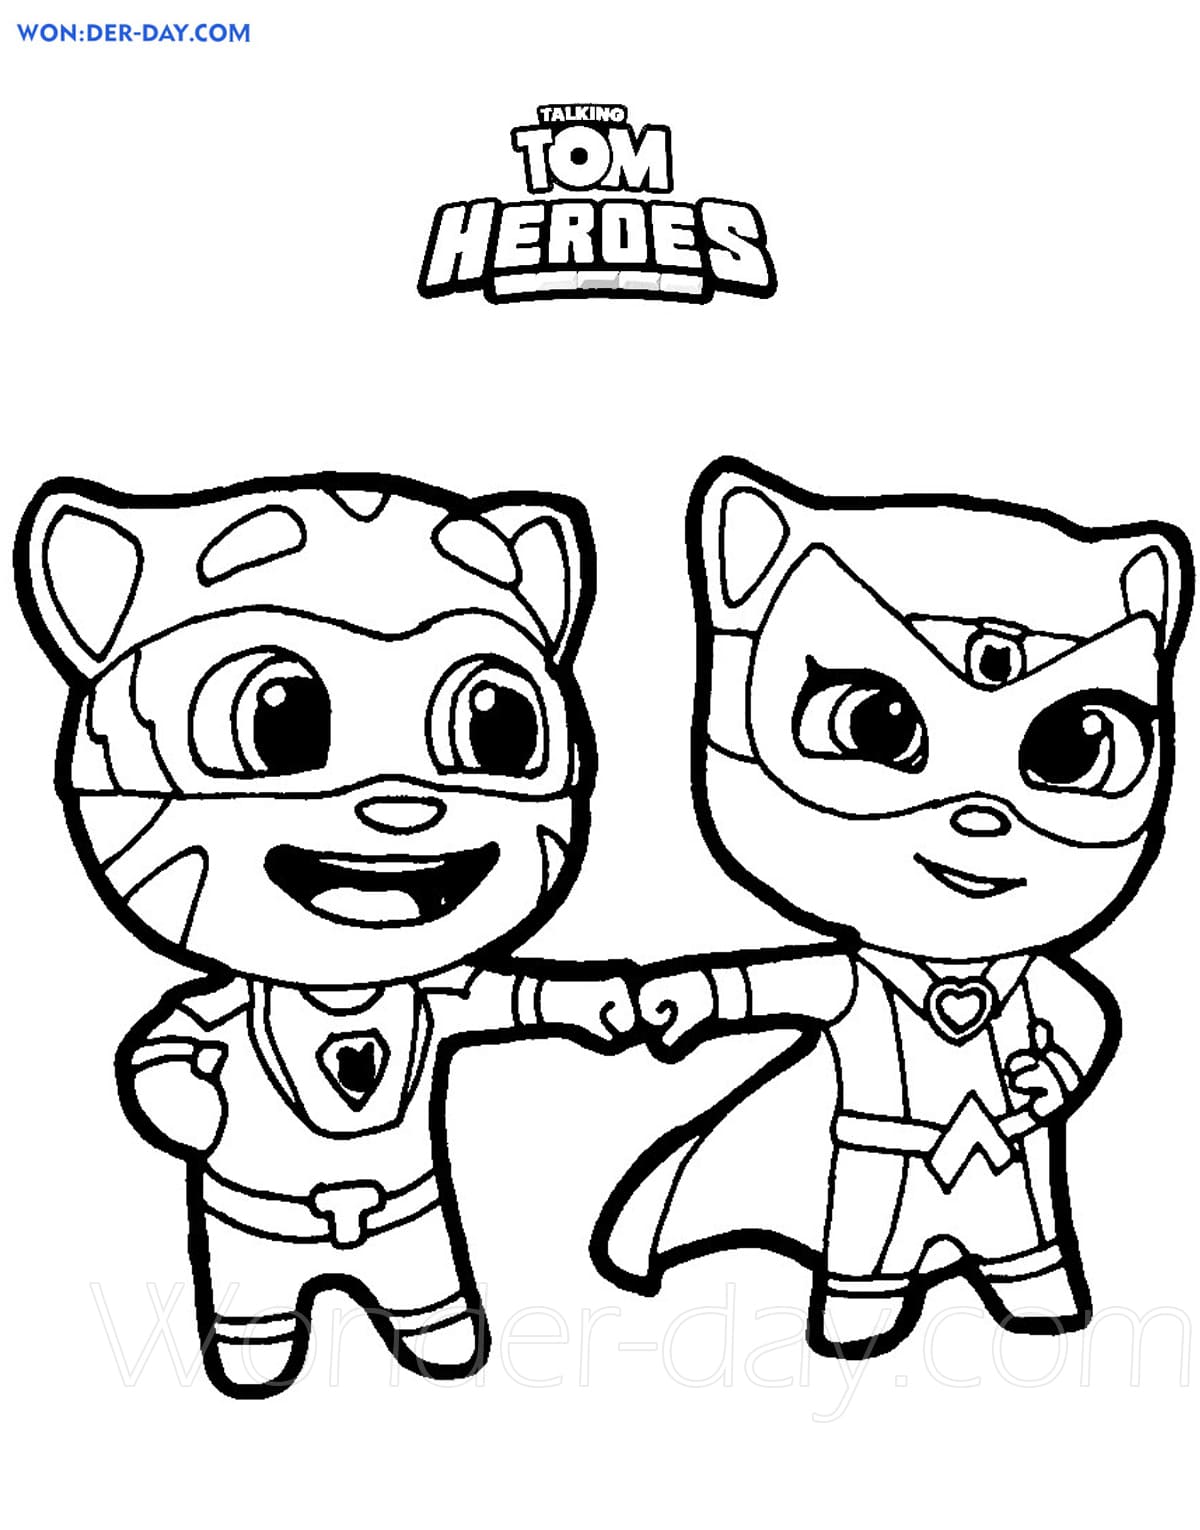 Desenhos para colorir do Talking Tom Herói Wonder day